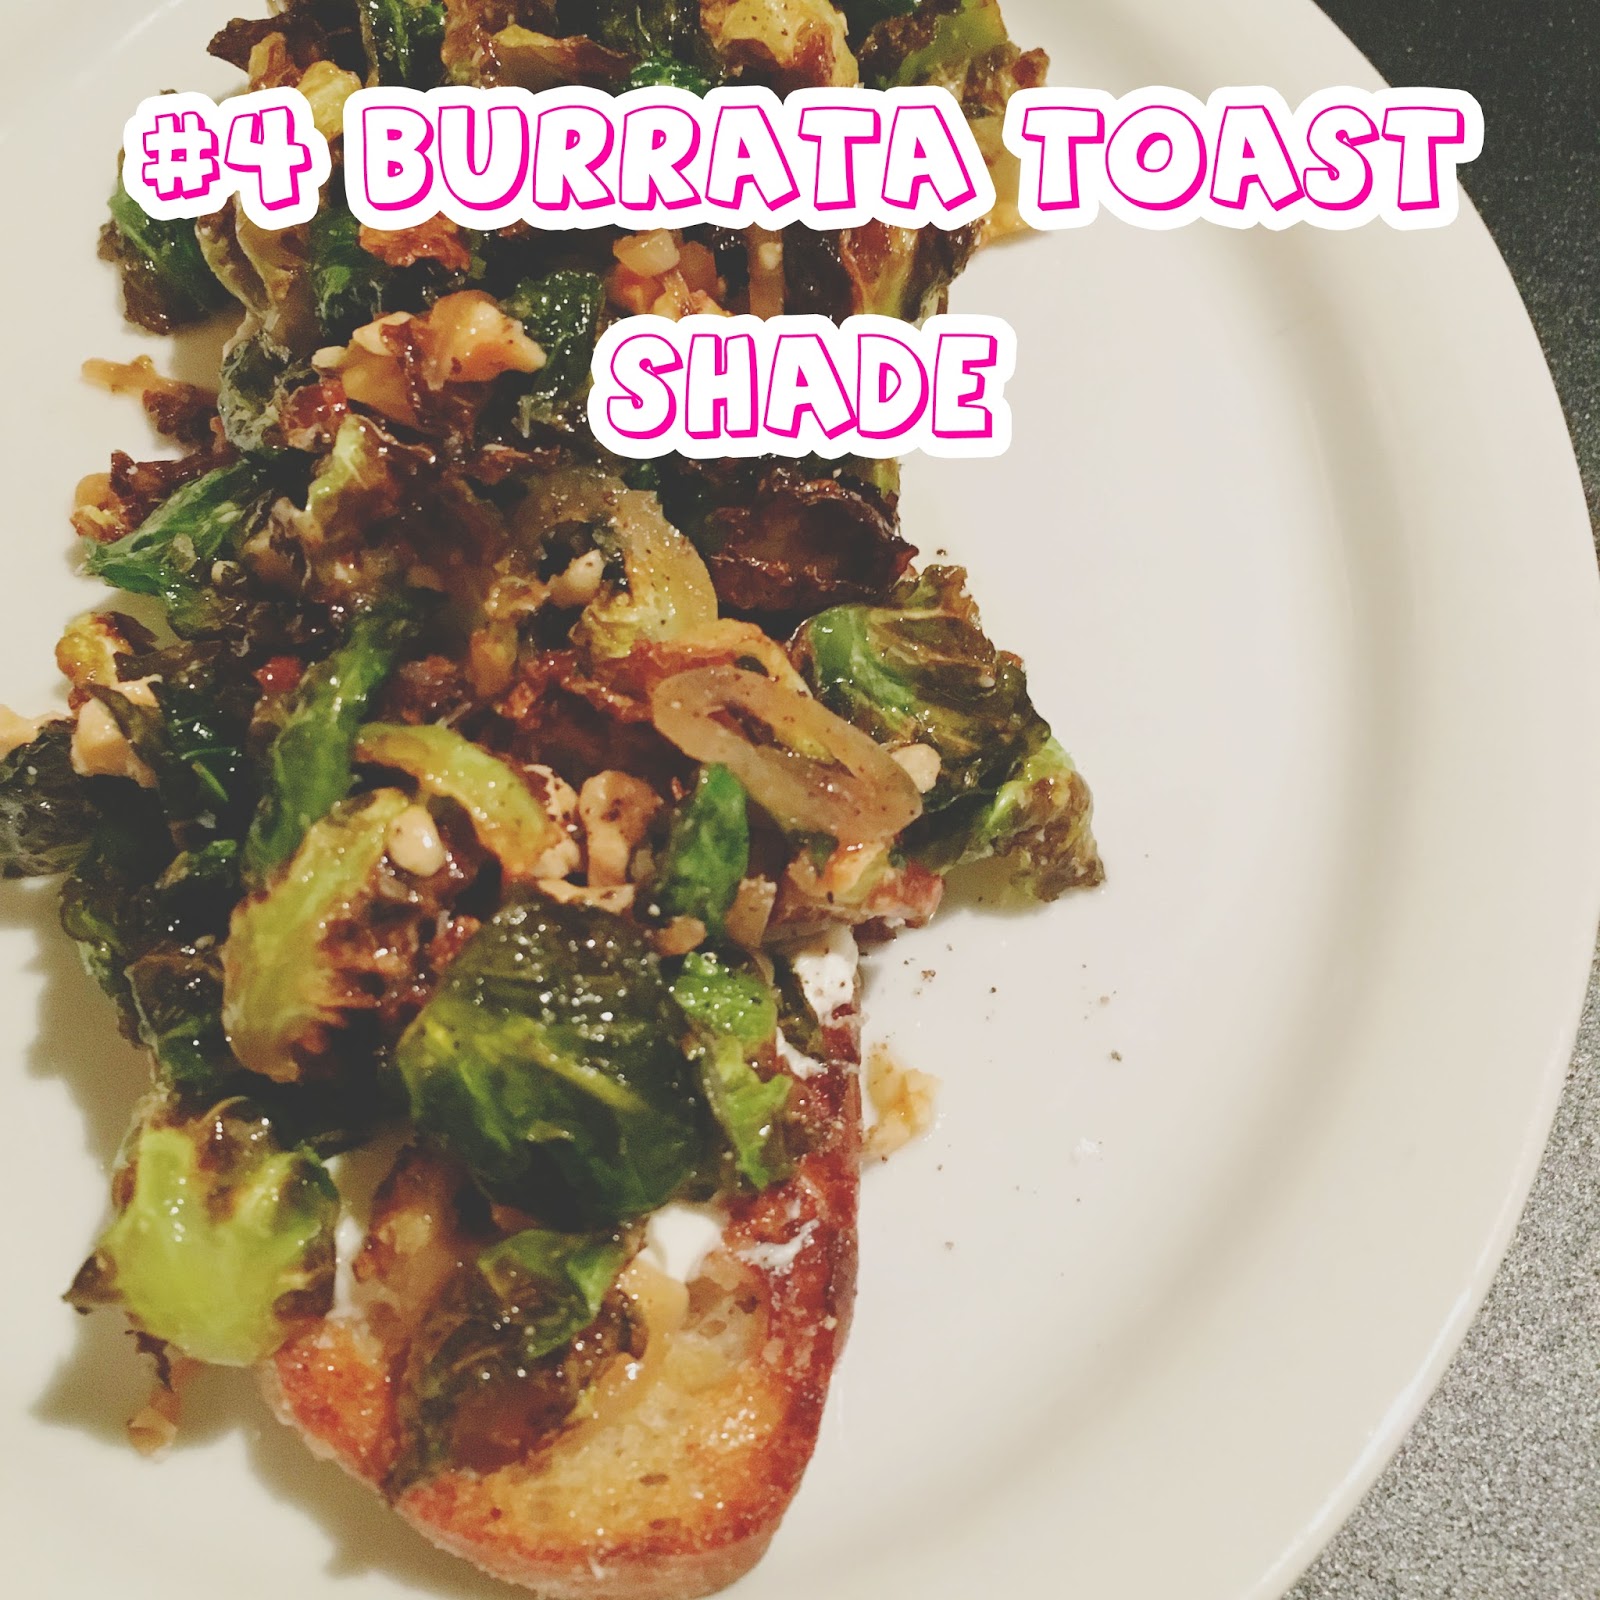 #Burrata Toast at Shade - A restaurant in Houston, Texas